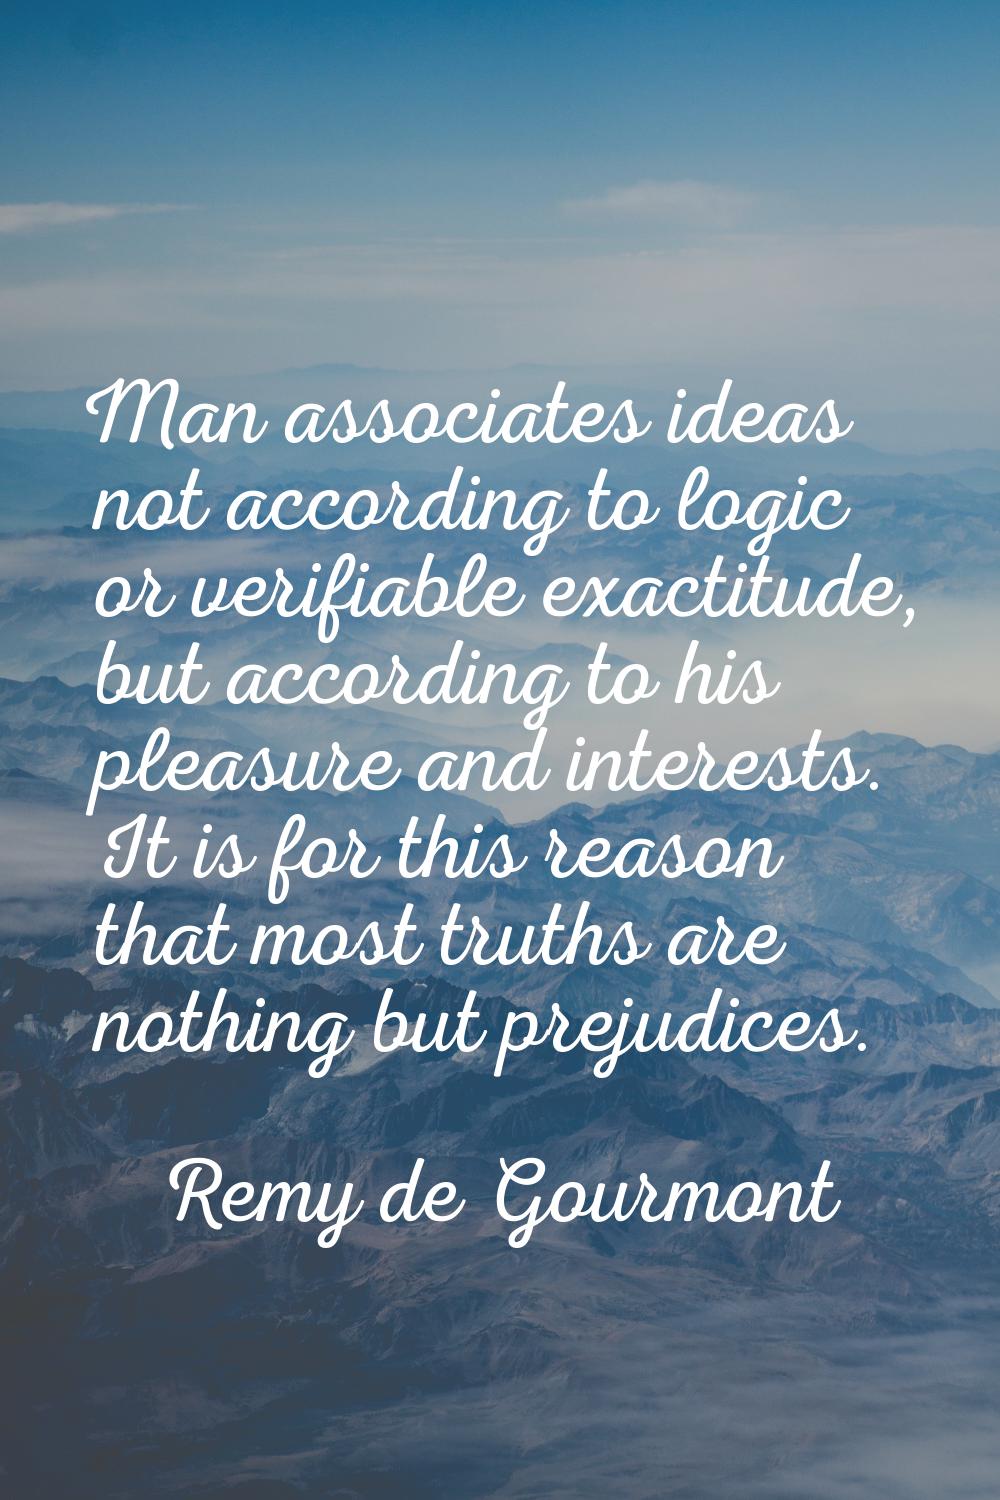 Man associates ideas not according to logic or verifiable exactitude, but according to his pleasure